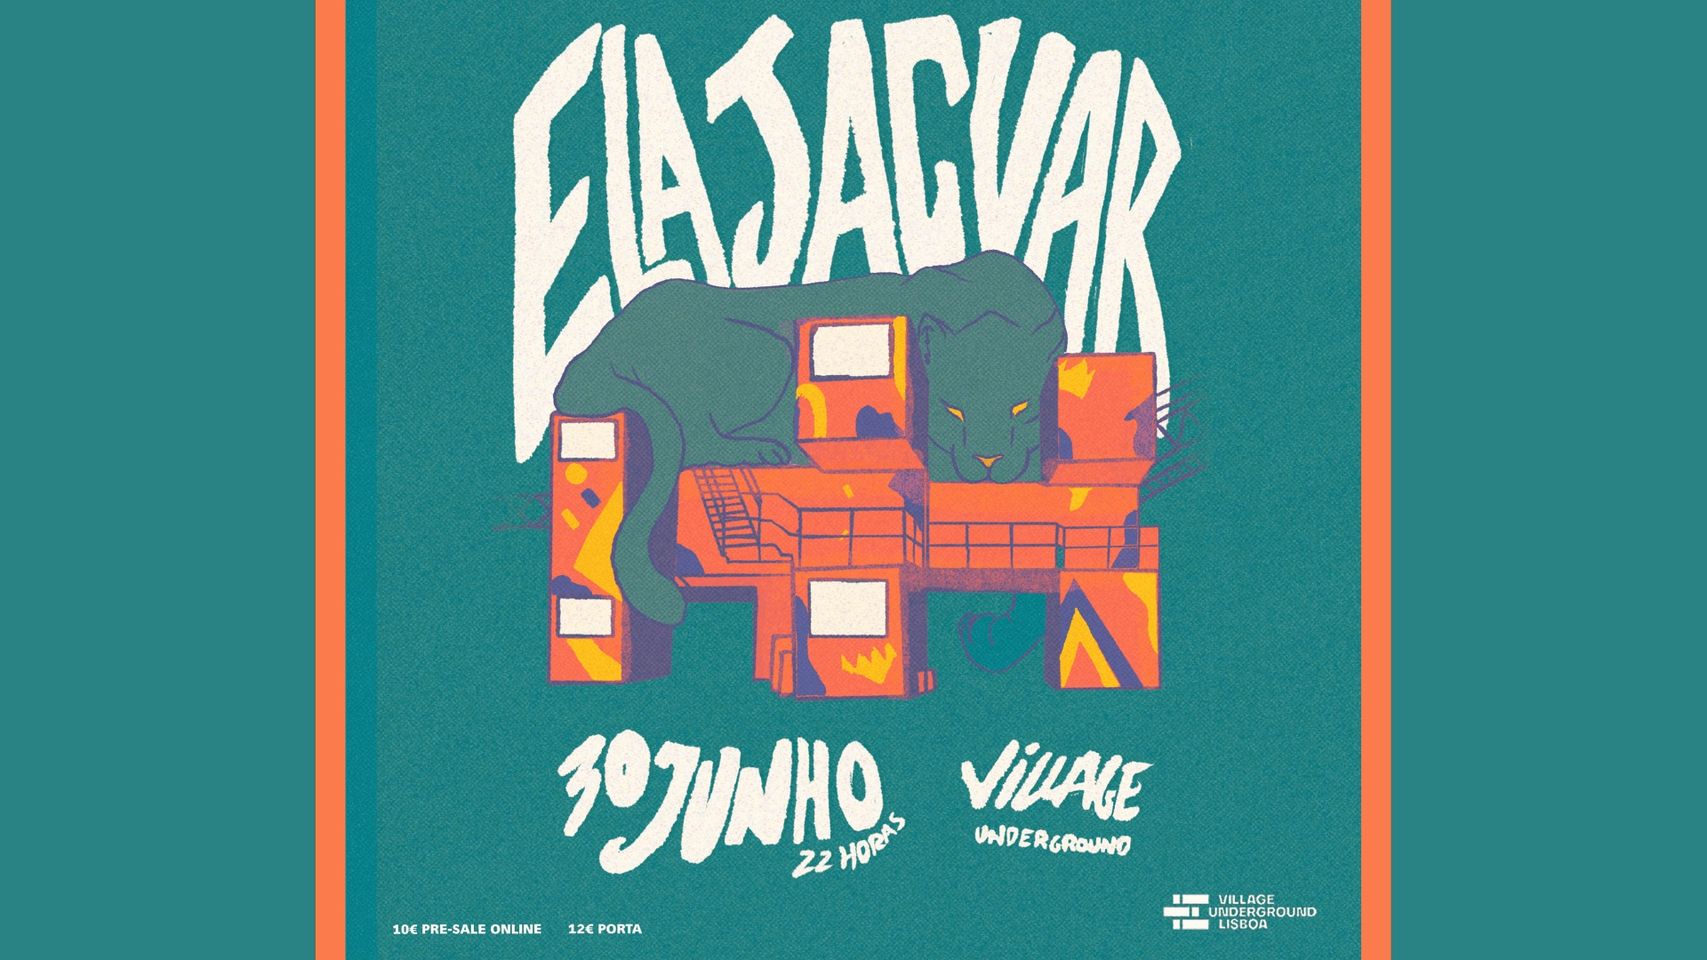 Ela Jaguar - Village Underground Lisboa